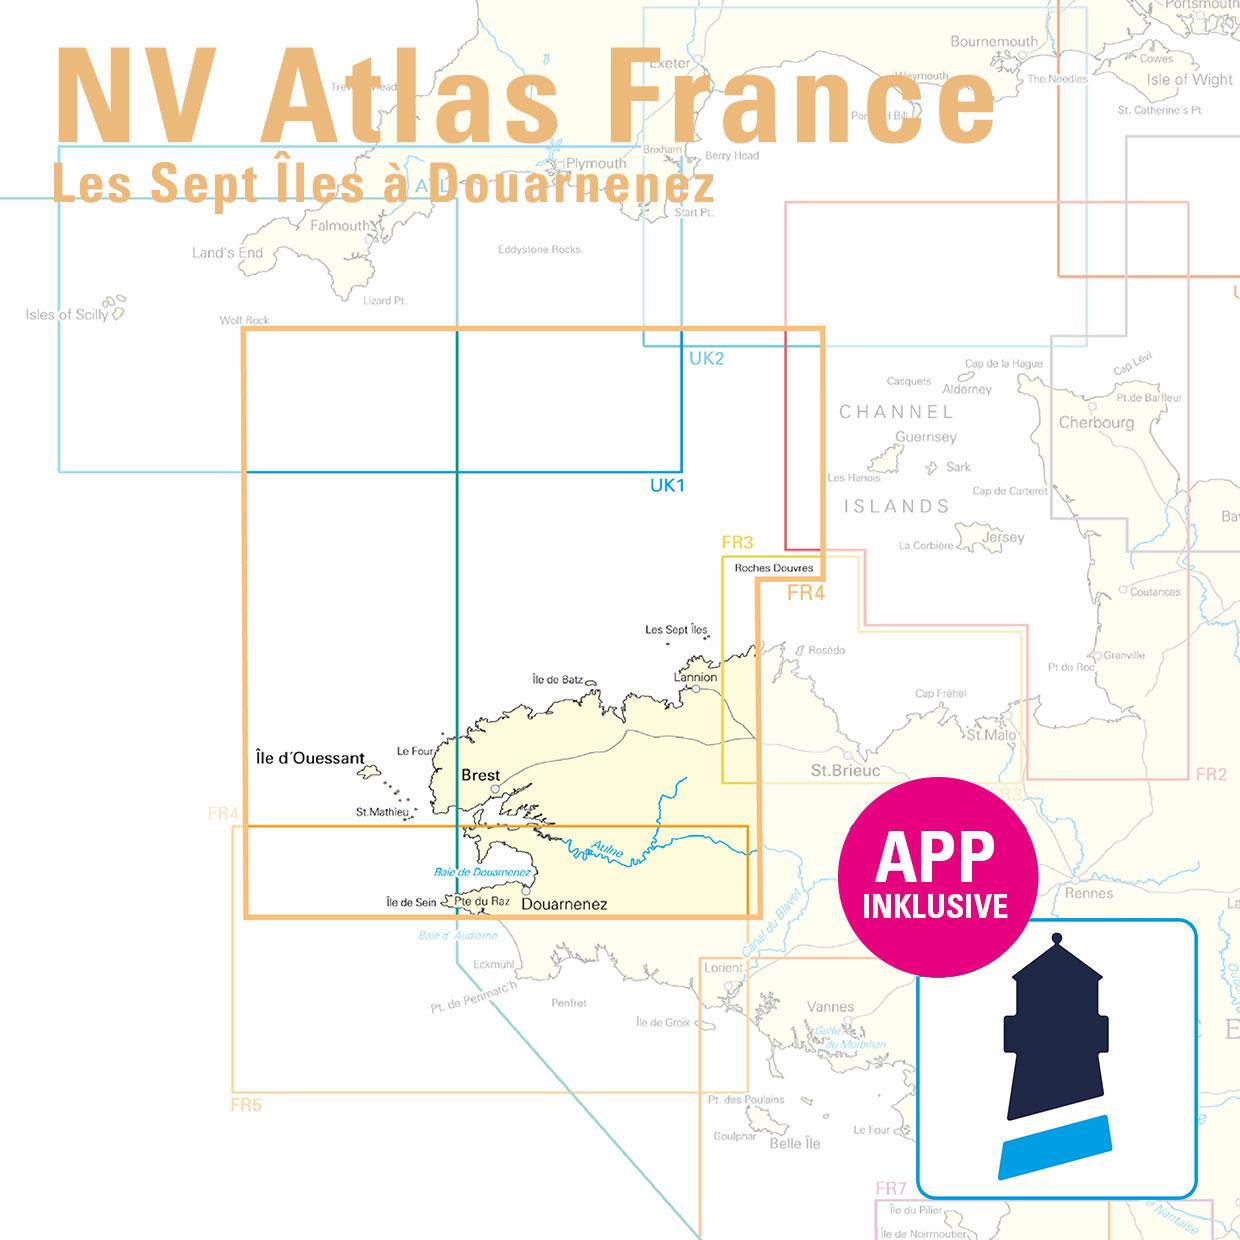 NV Charts France FR4 - Les Sept Isles à Douarnenez